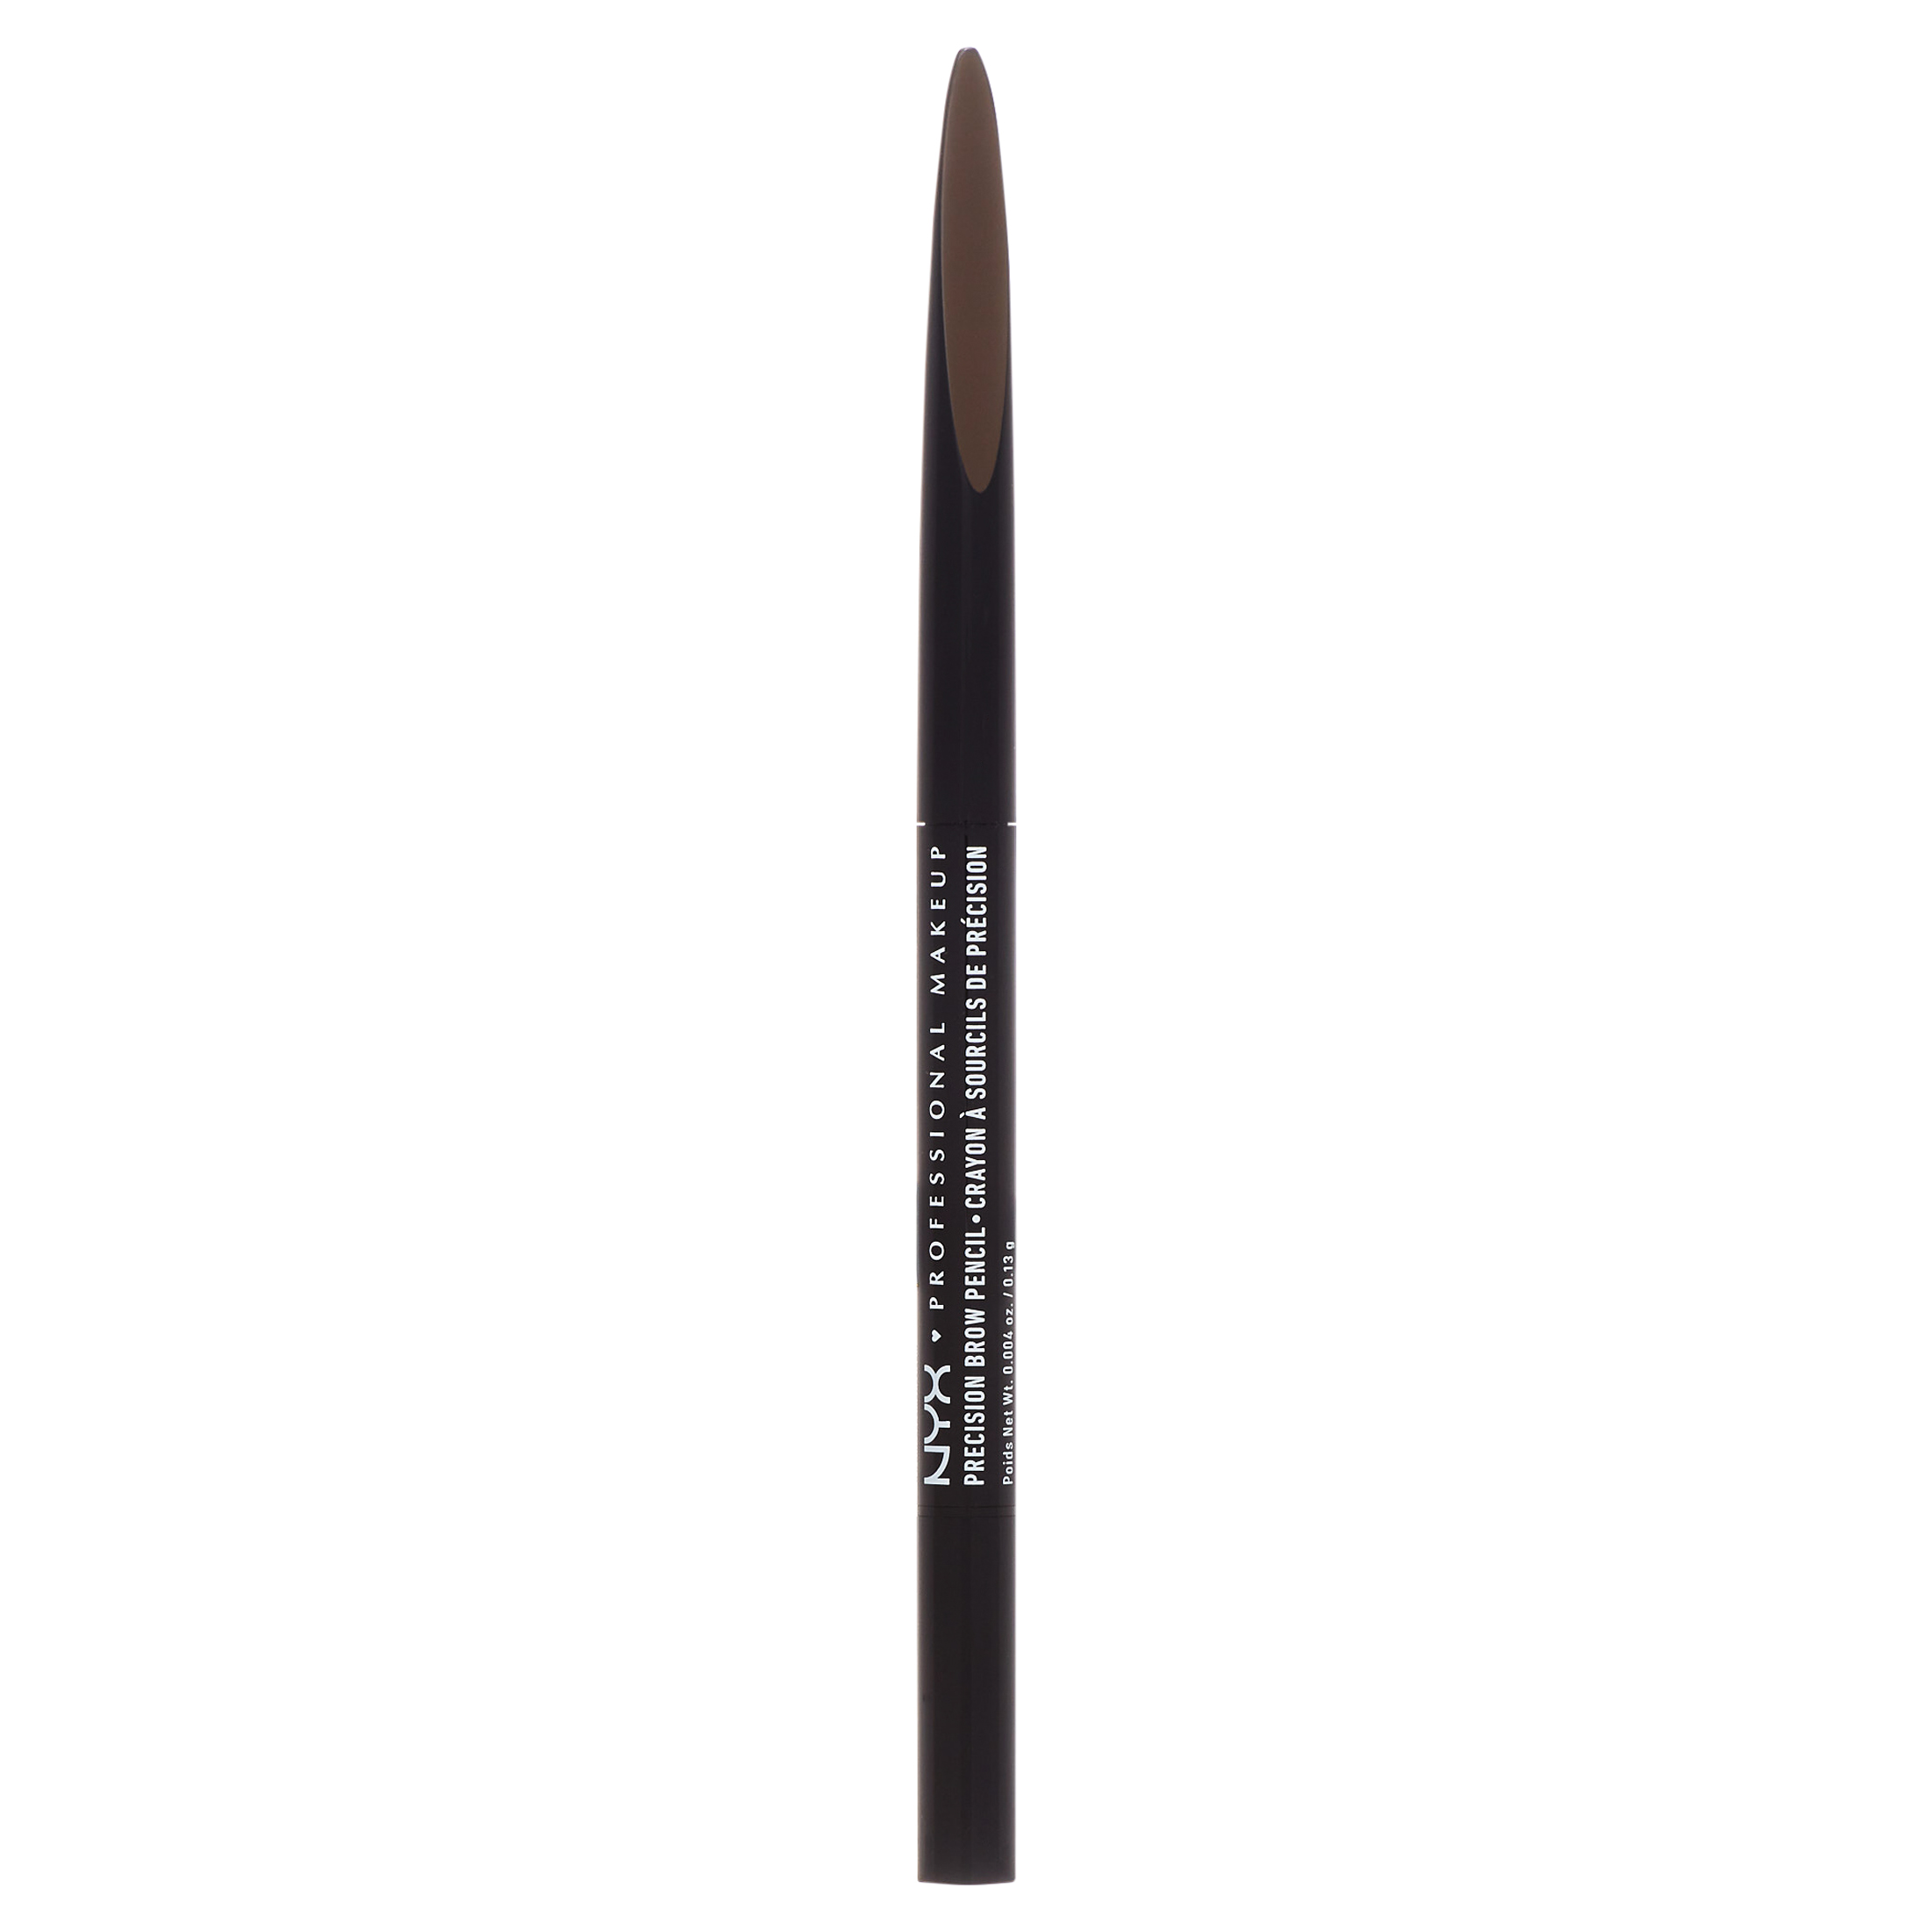 NYX Professional Makeup Precision Eyebrow Pencil, Espresso - image 10 of 12